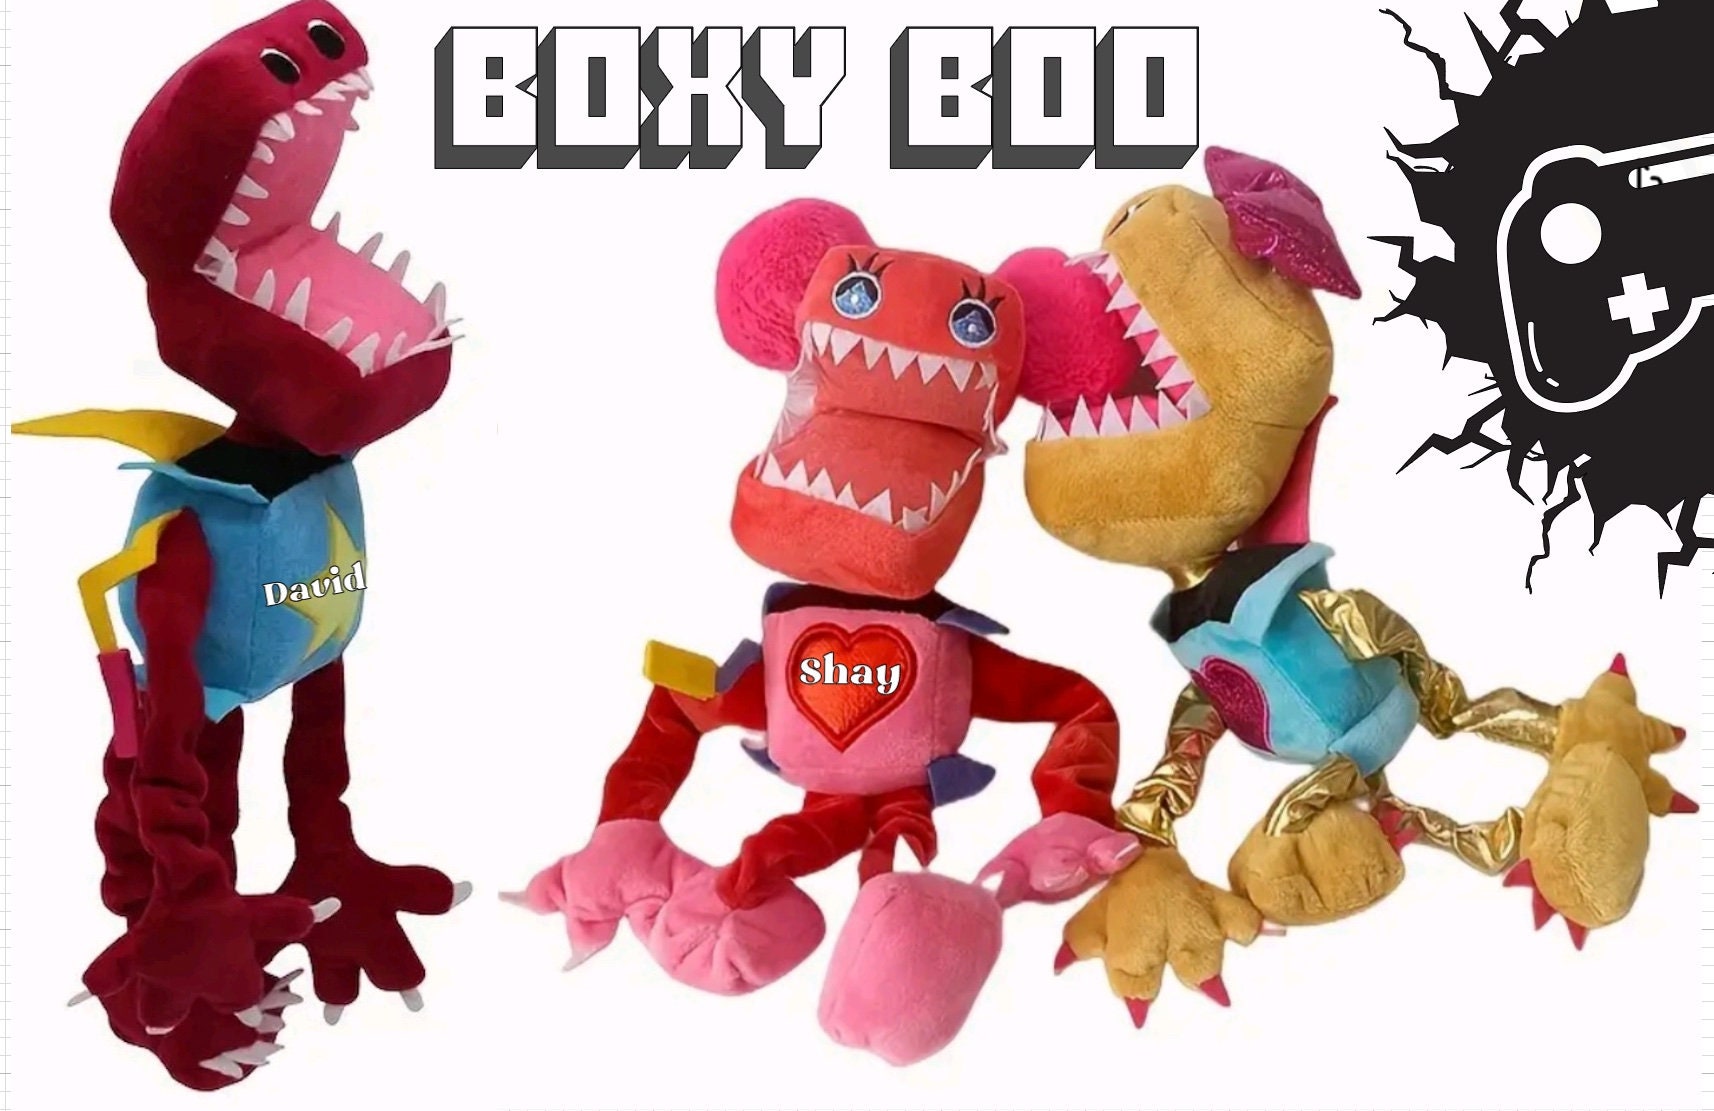 Boxy Boo Girl  Poppy Playtime Store